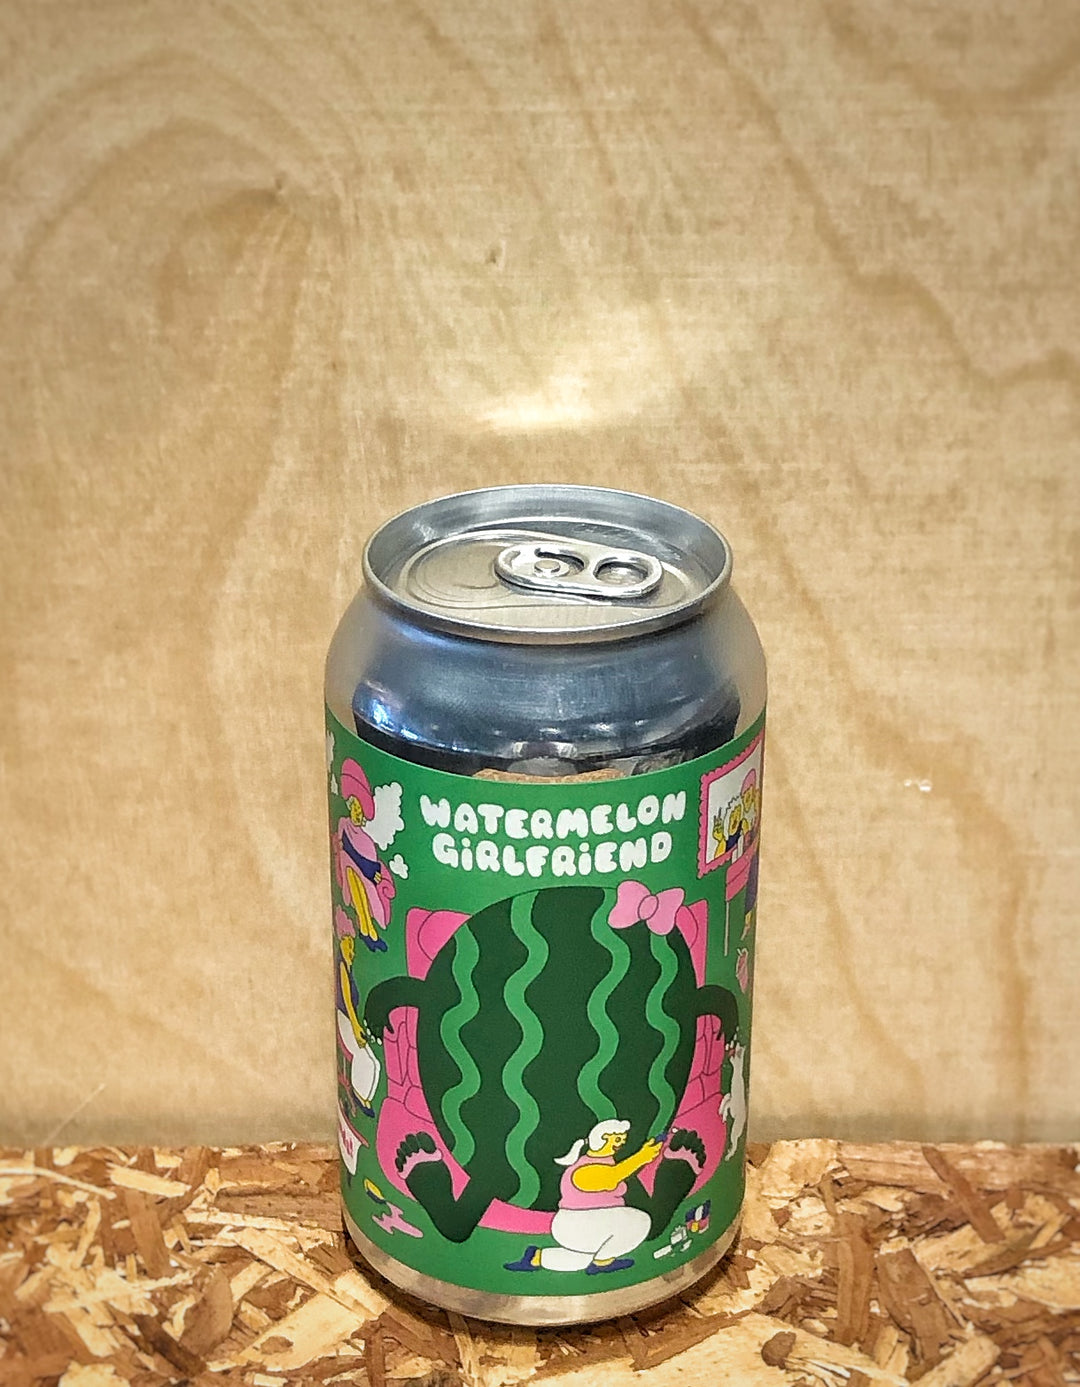 Prairie Artisan Ales 'Watermelon Girlfriend' Sour Ale with Watermelon & Sea Salt (Oklahoma City, OK)